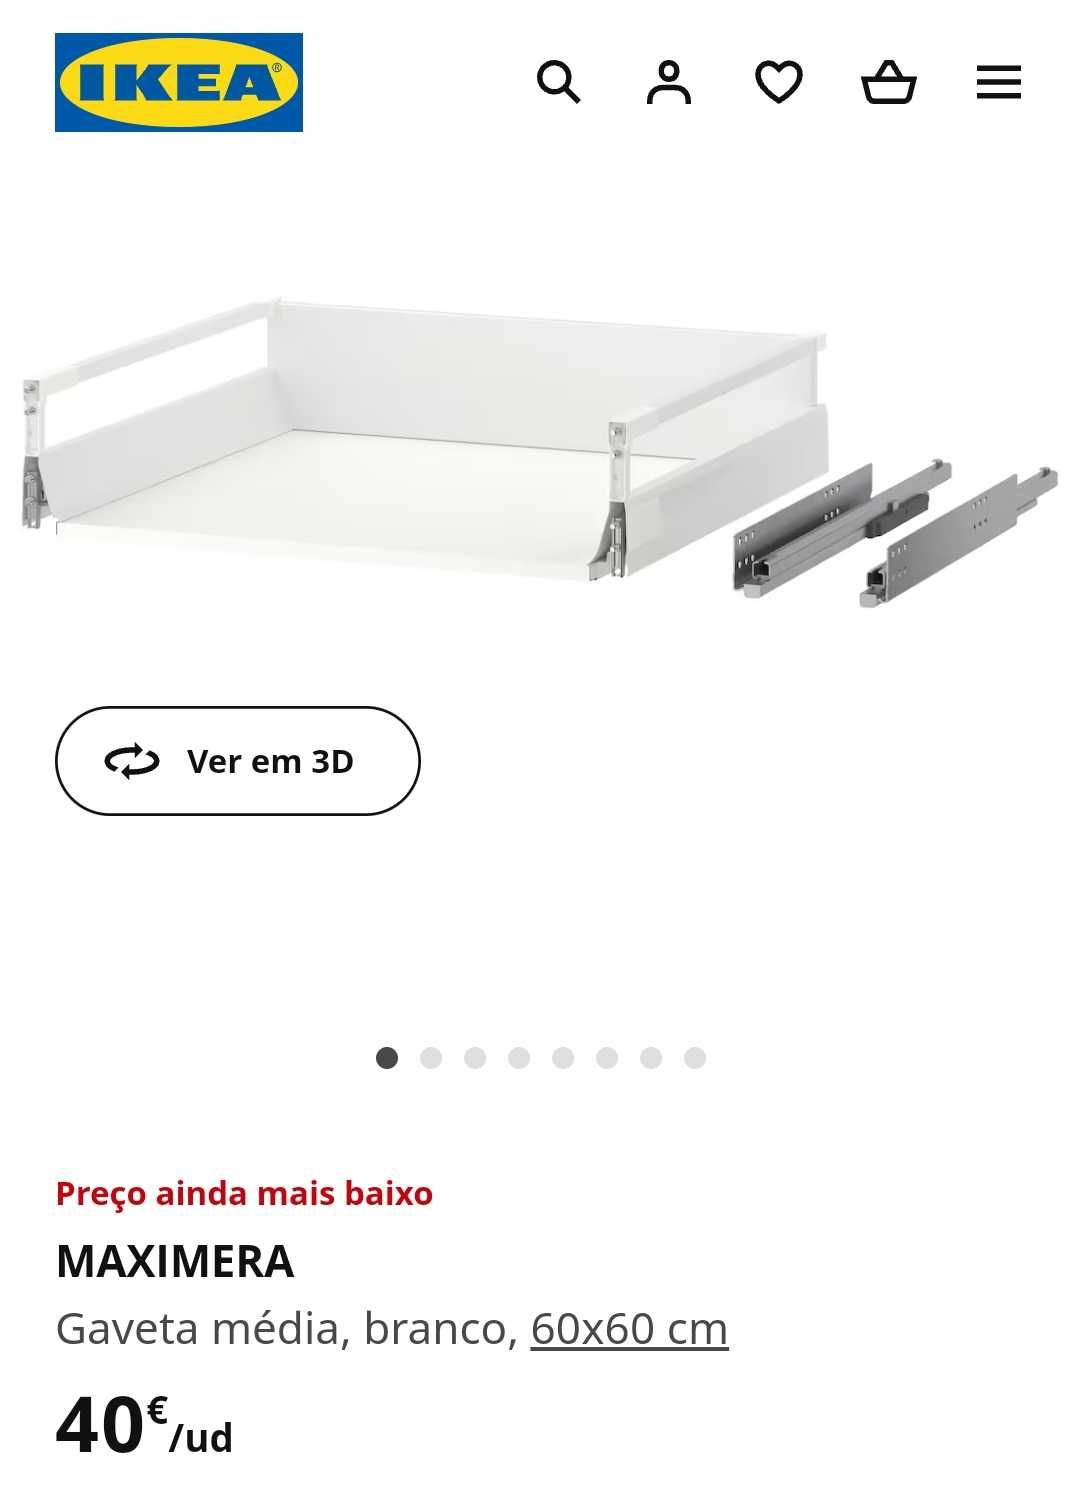 2 Gavetas IKEA Maximera Novas